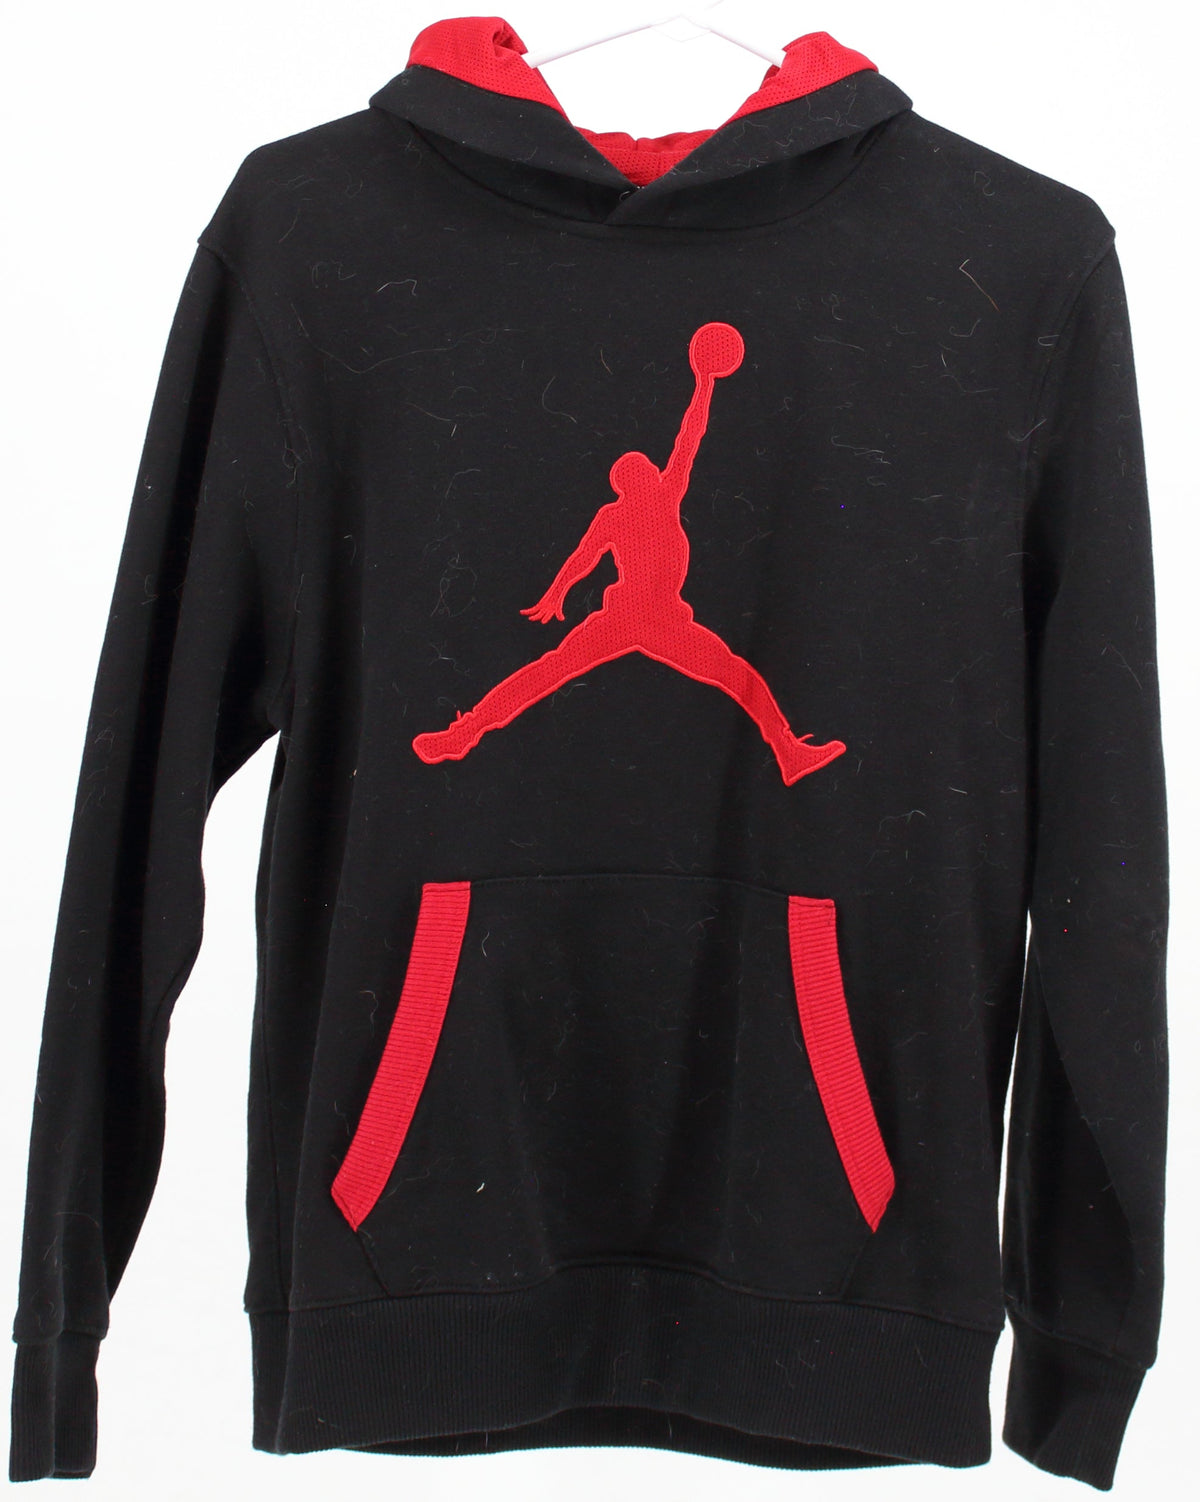 Jordan Logo Applique Black and Red Sweatshirt